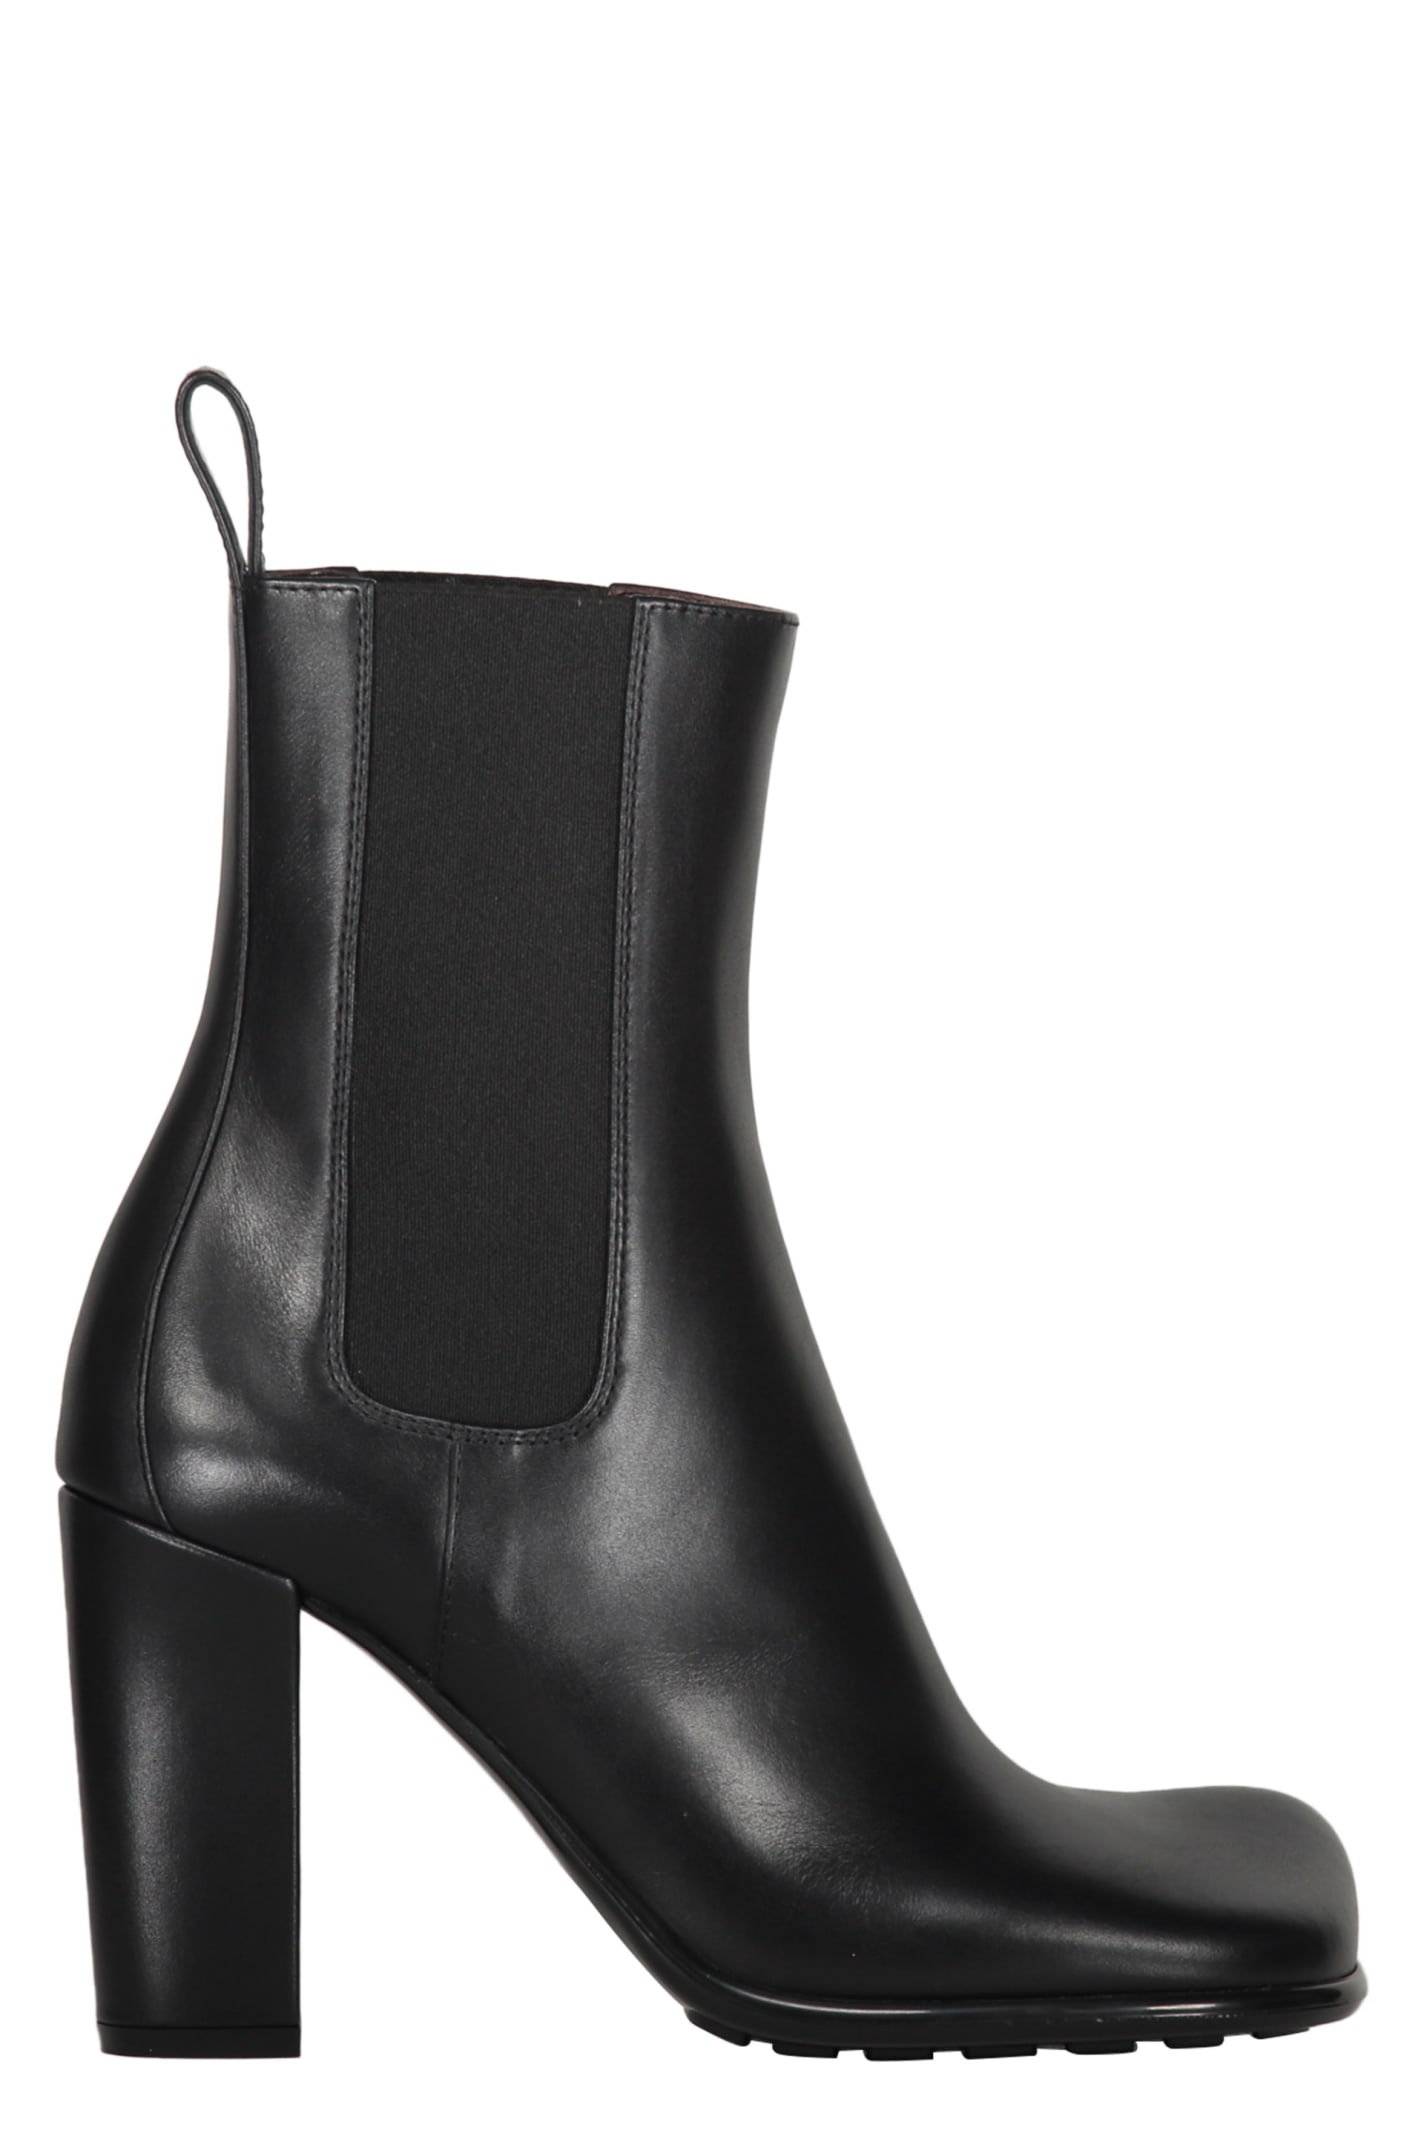 Bottega Veneta Storm Leather Ankle Boots In Black